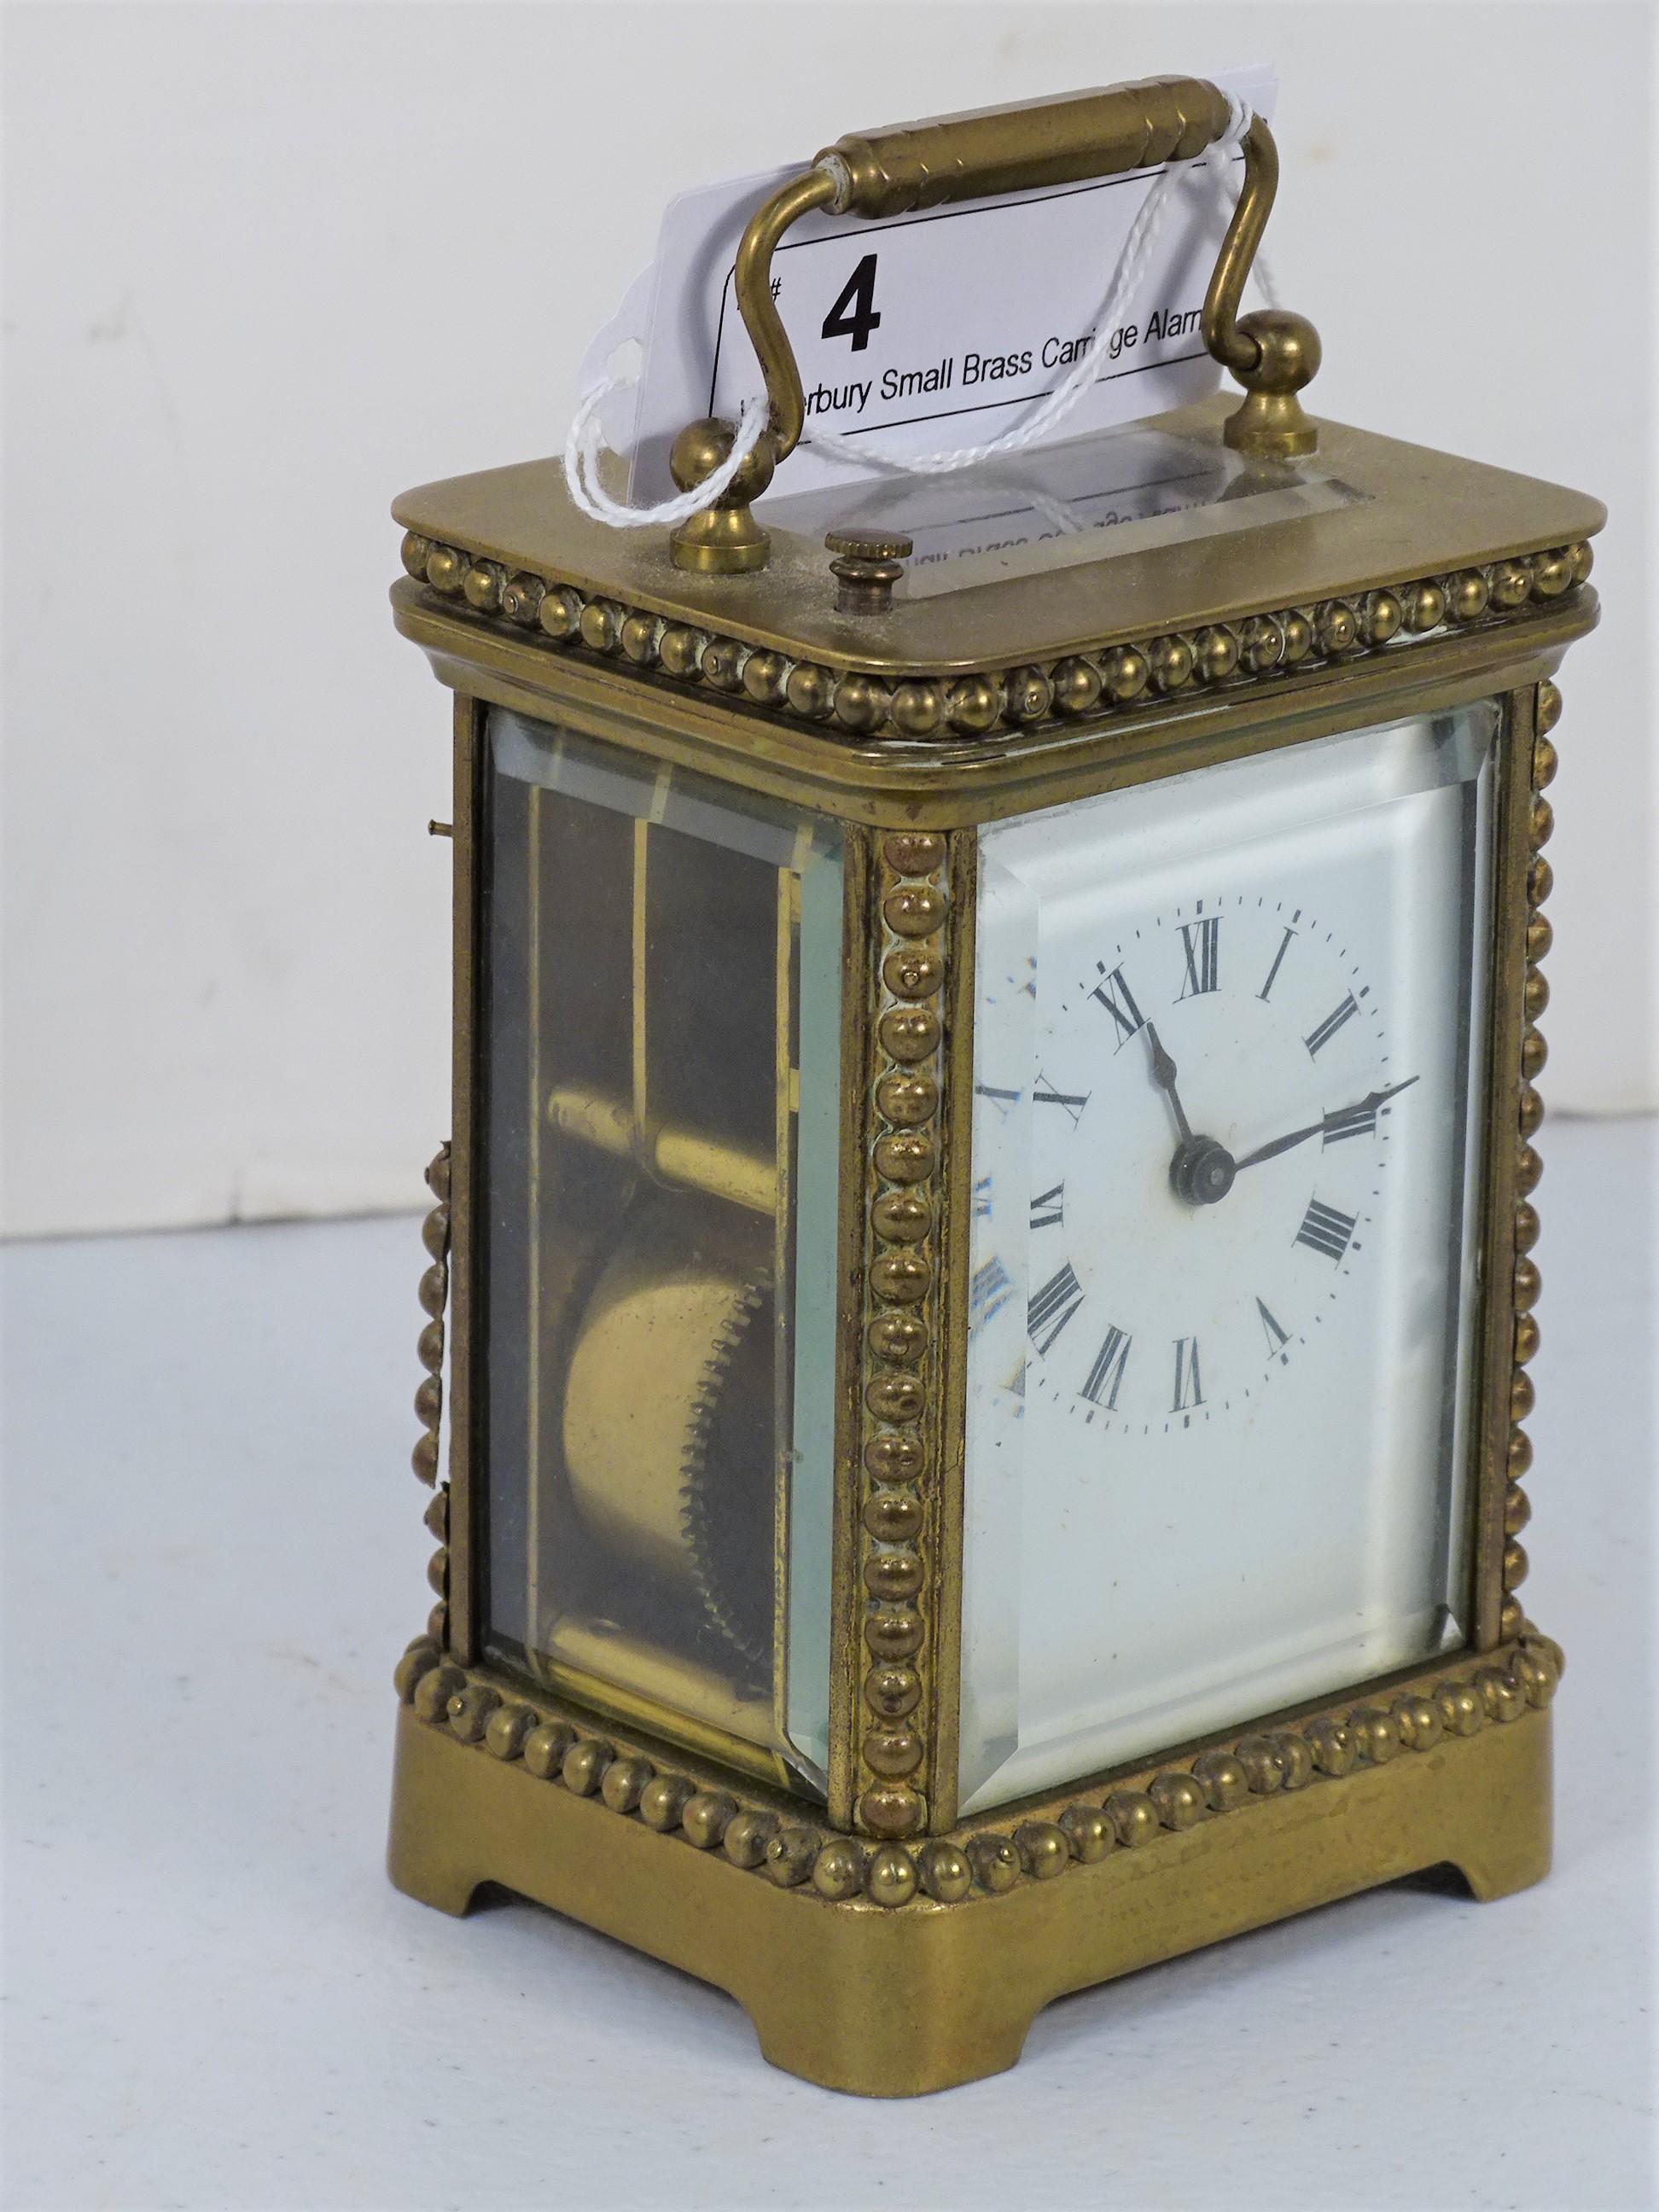 Waterbury Small Brass Carriage Alarm Clock